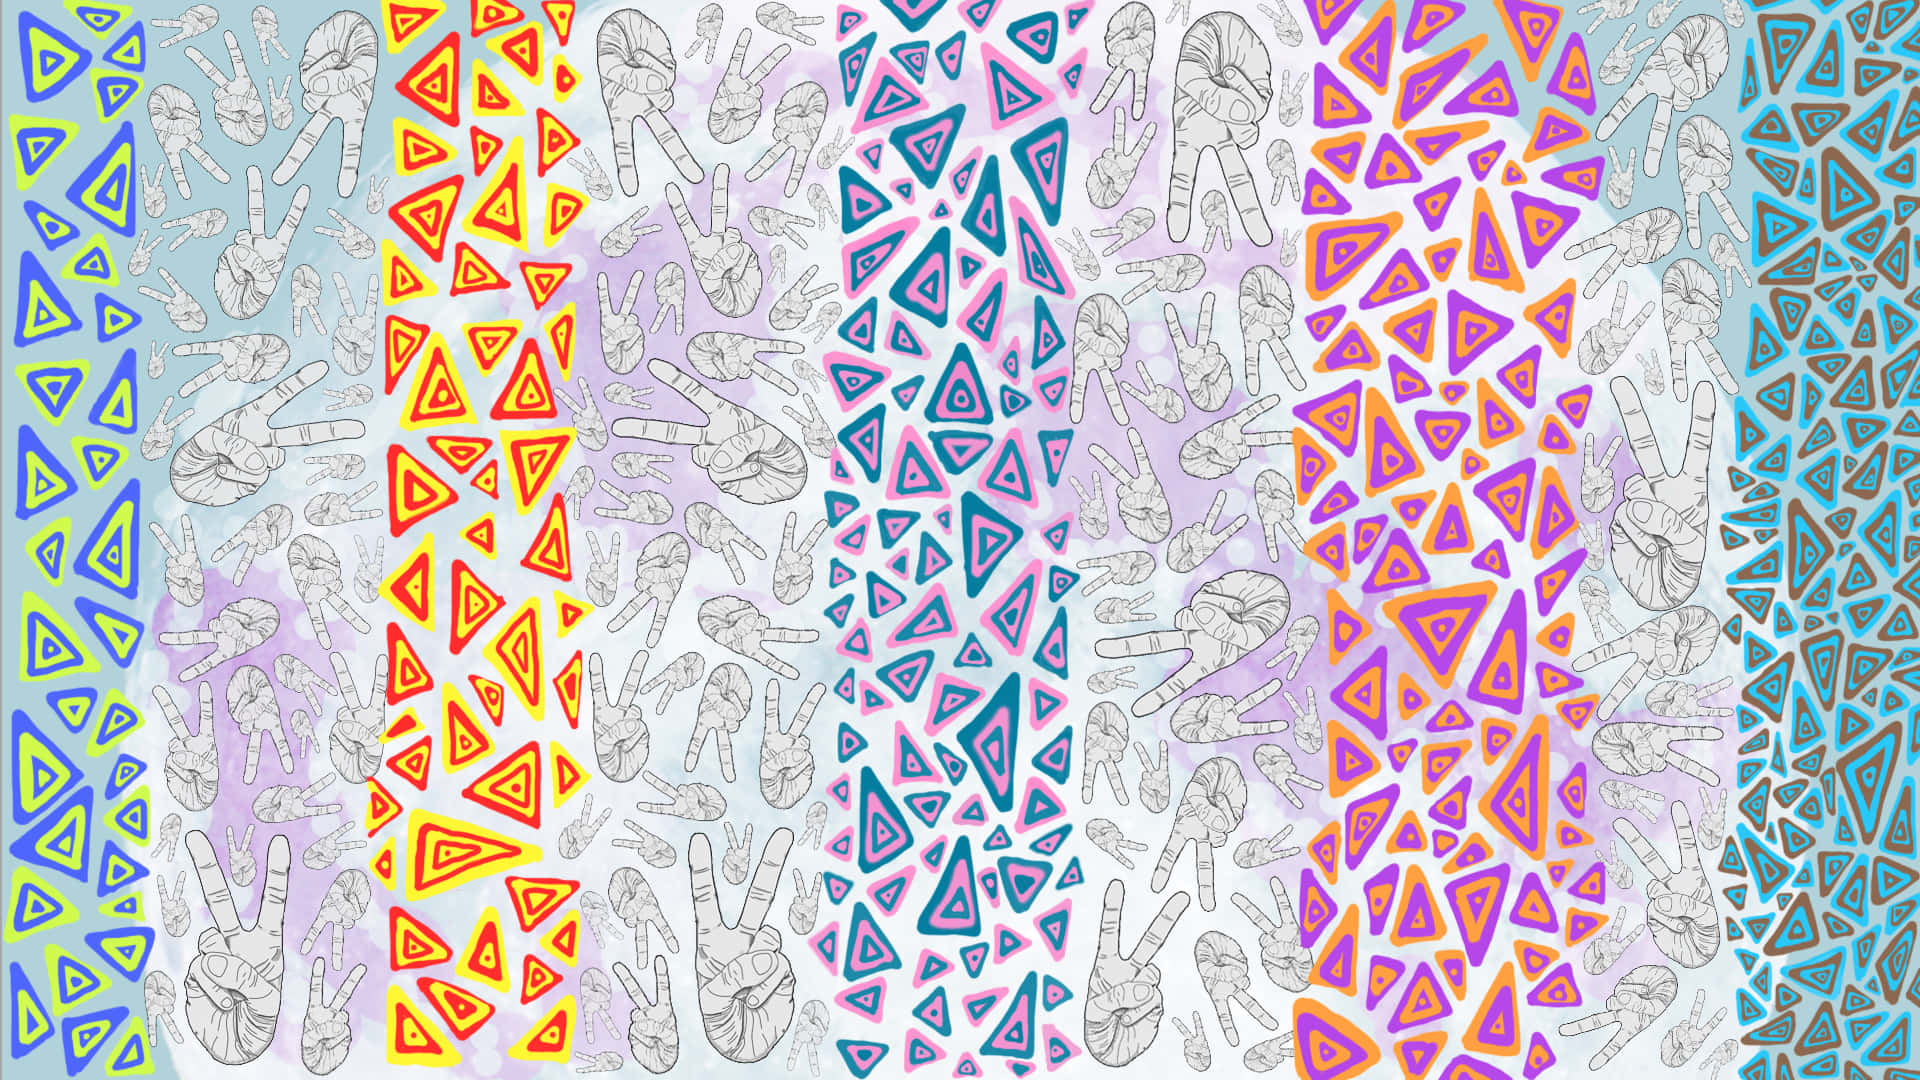 tumblr pattern backgrounds purple